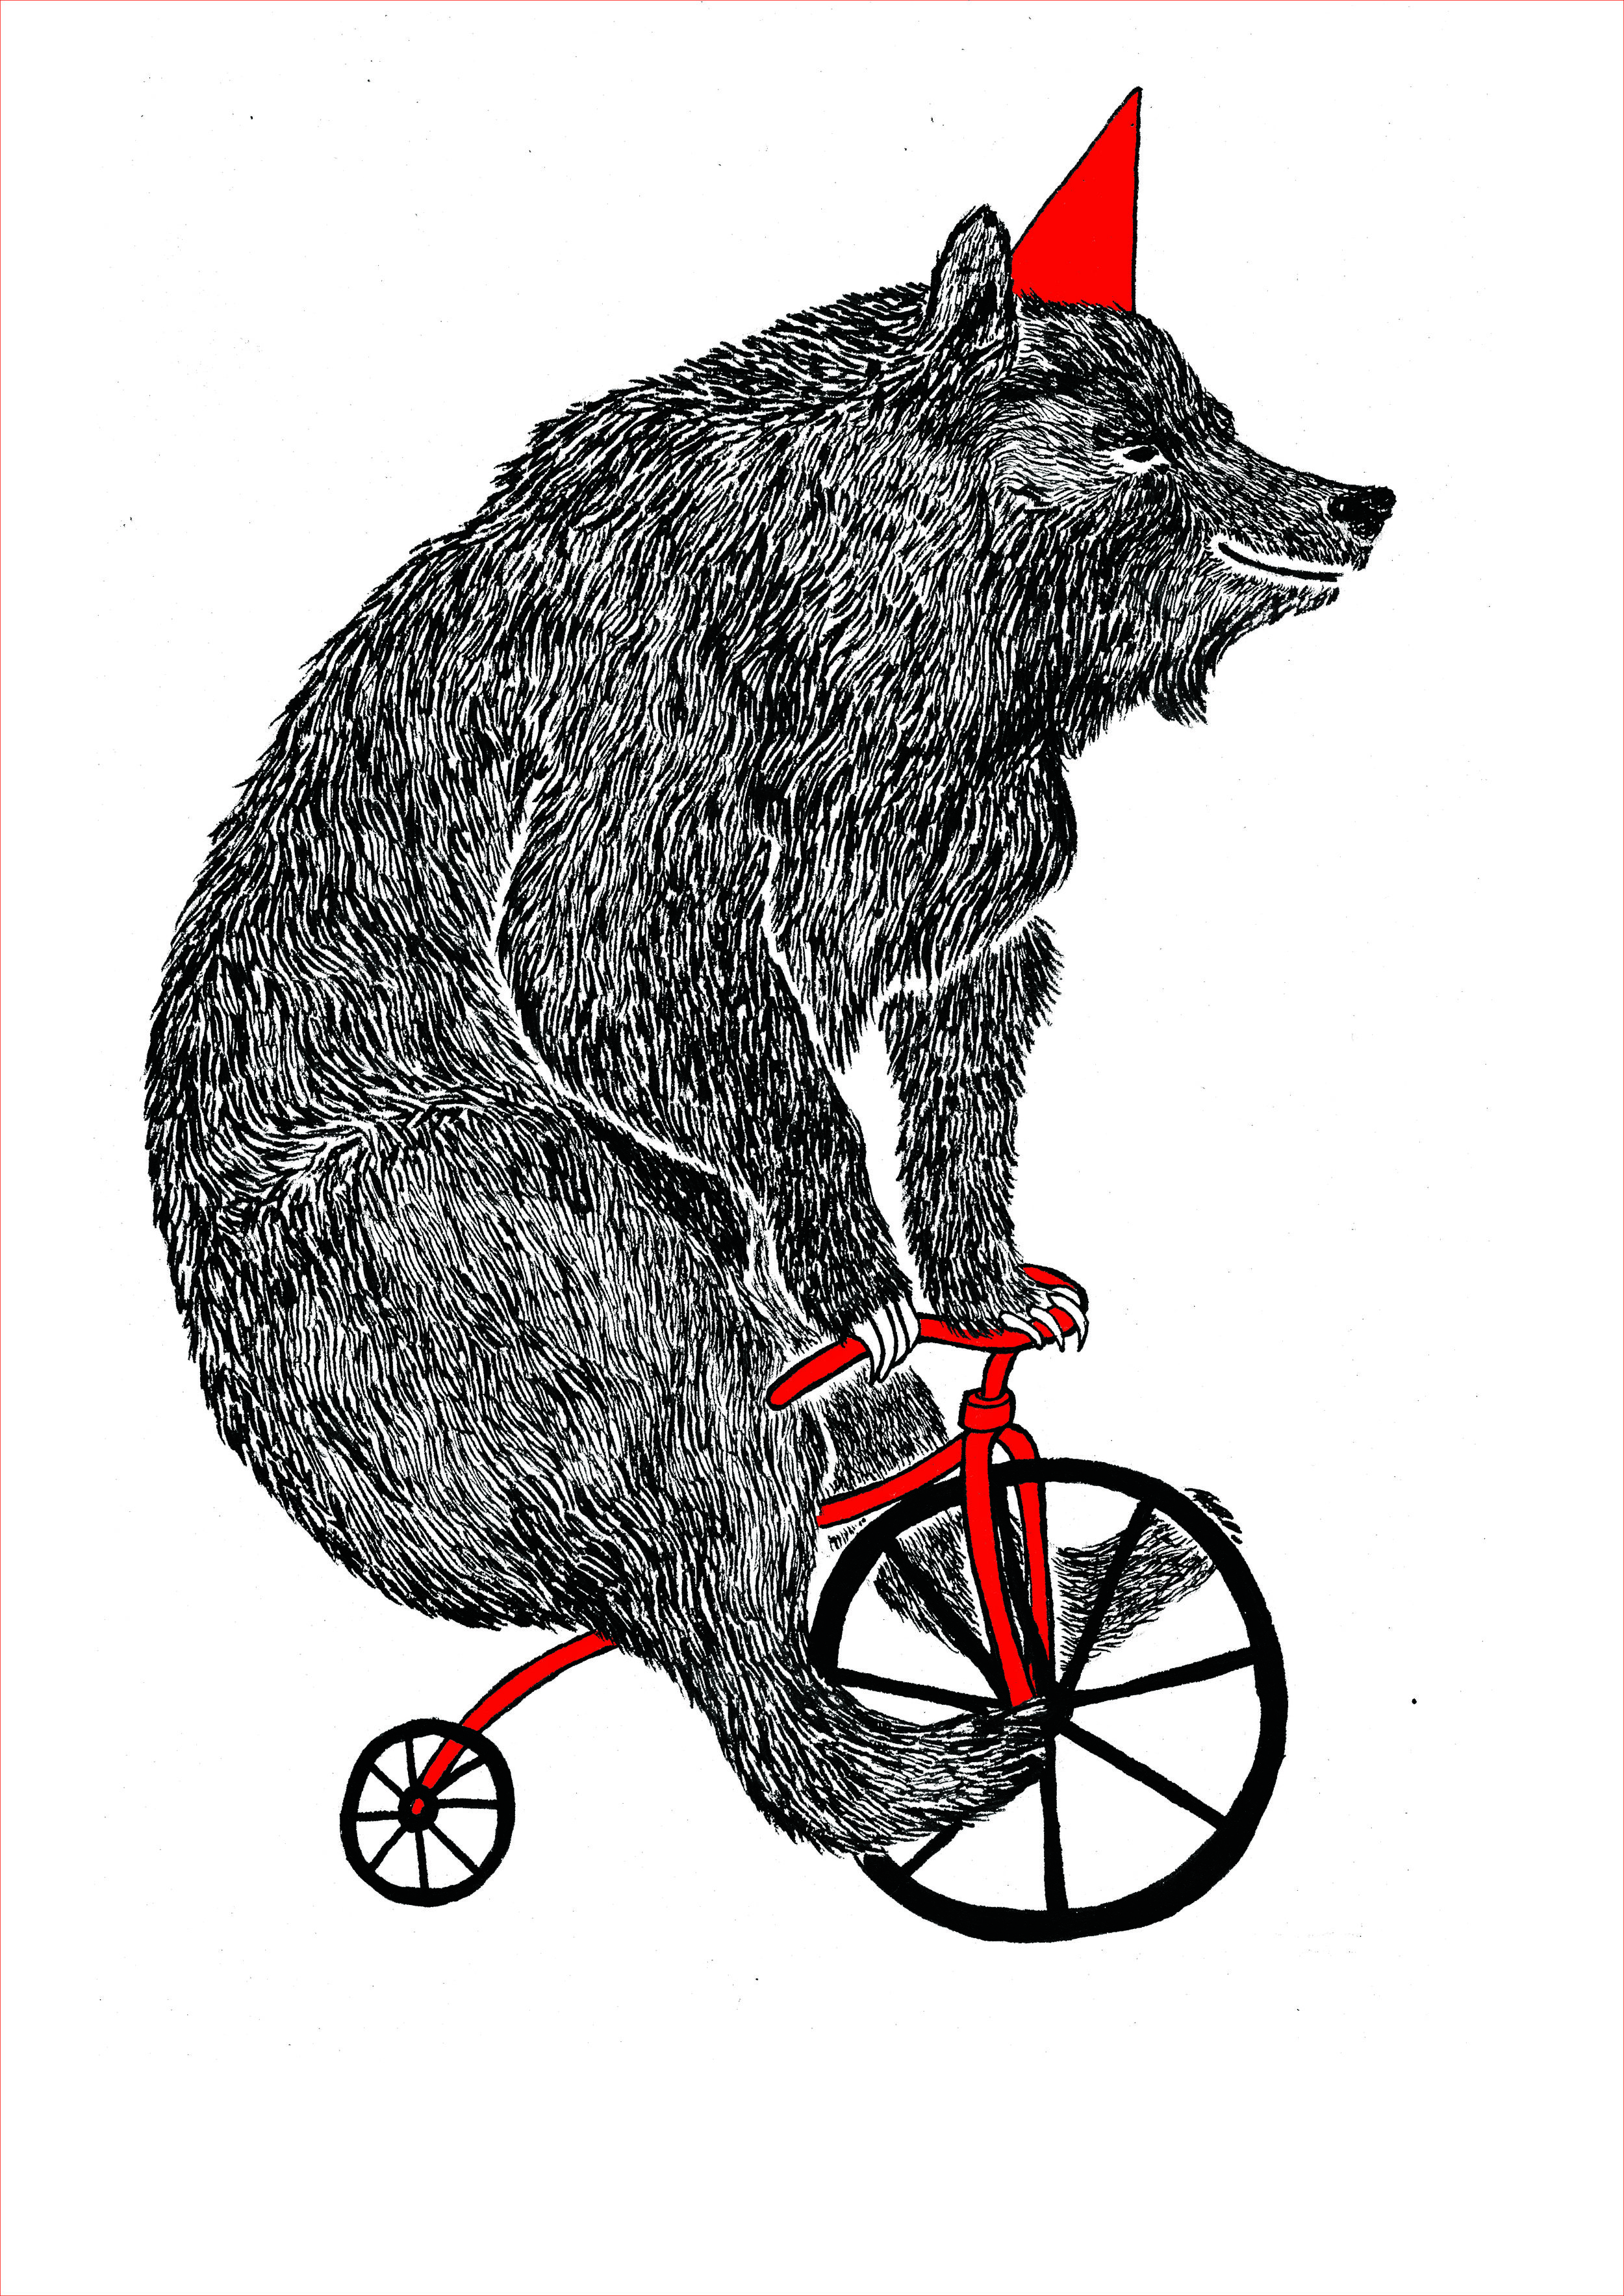 Bear on Bike